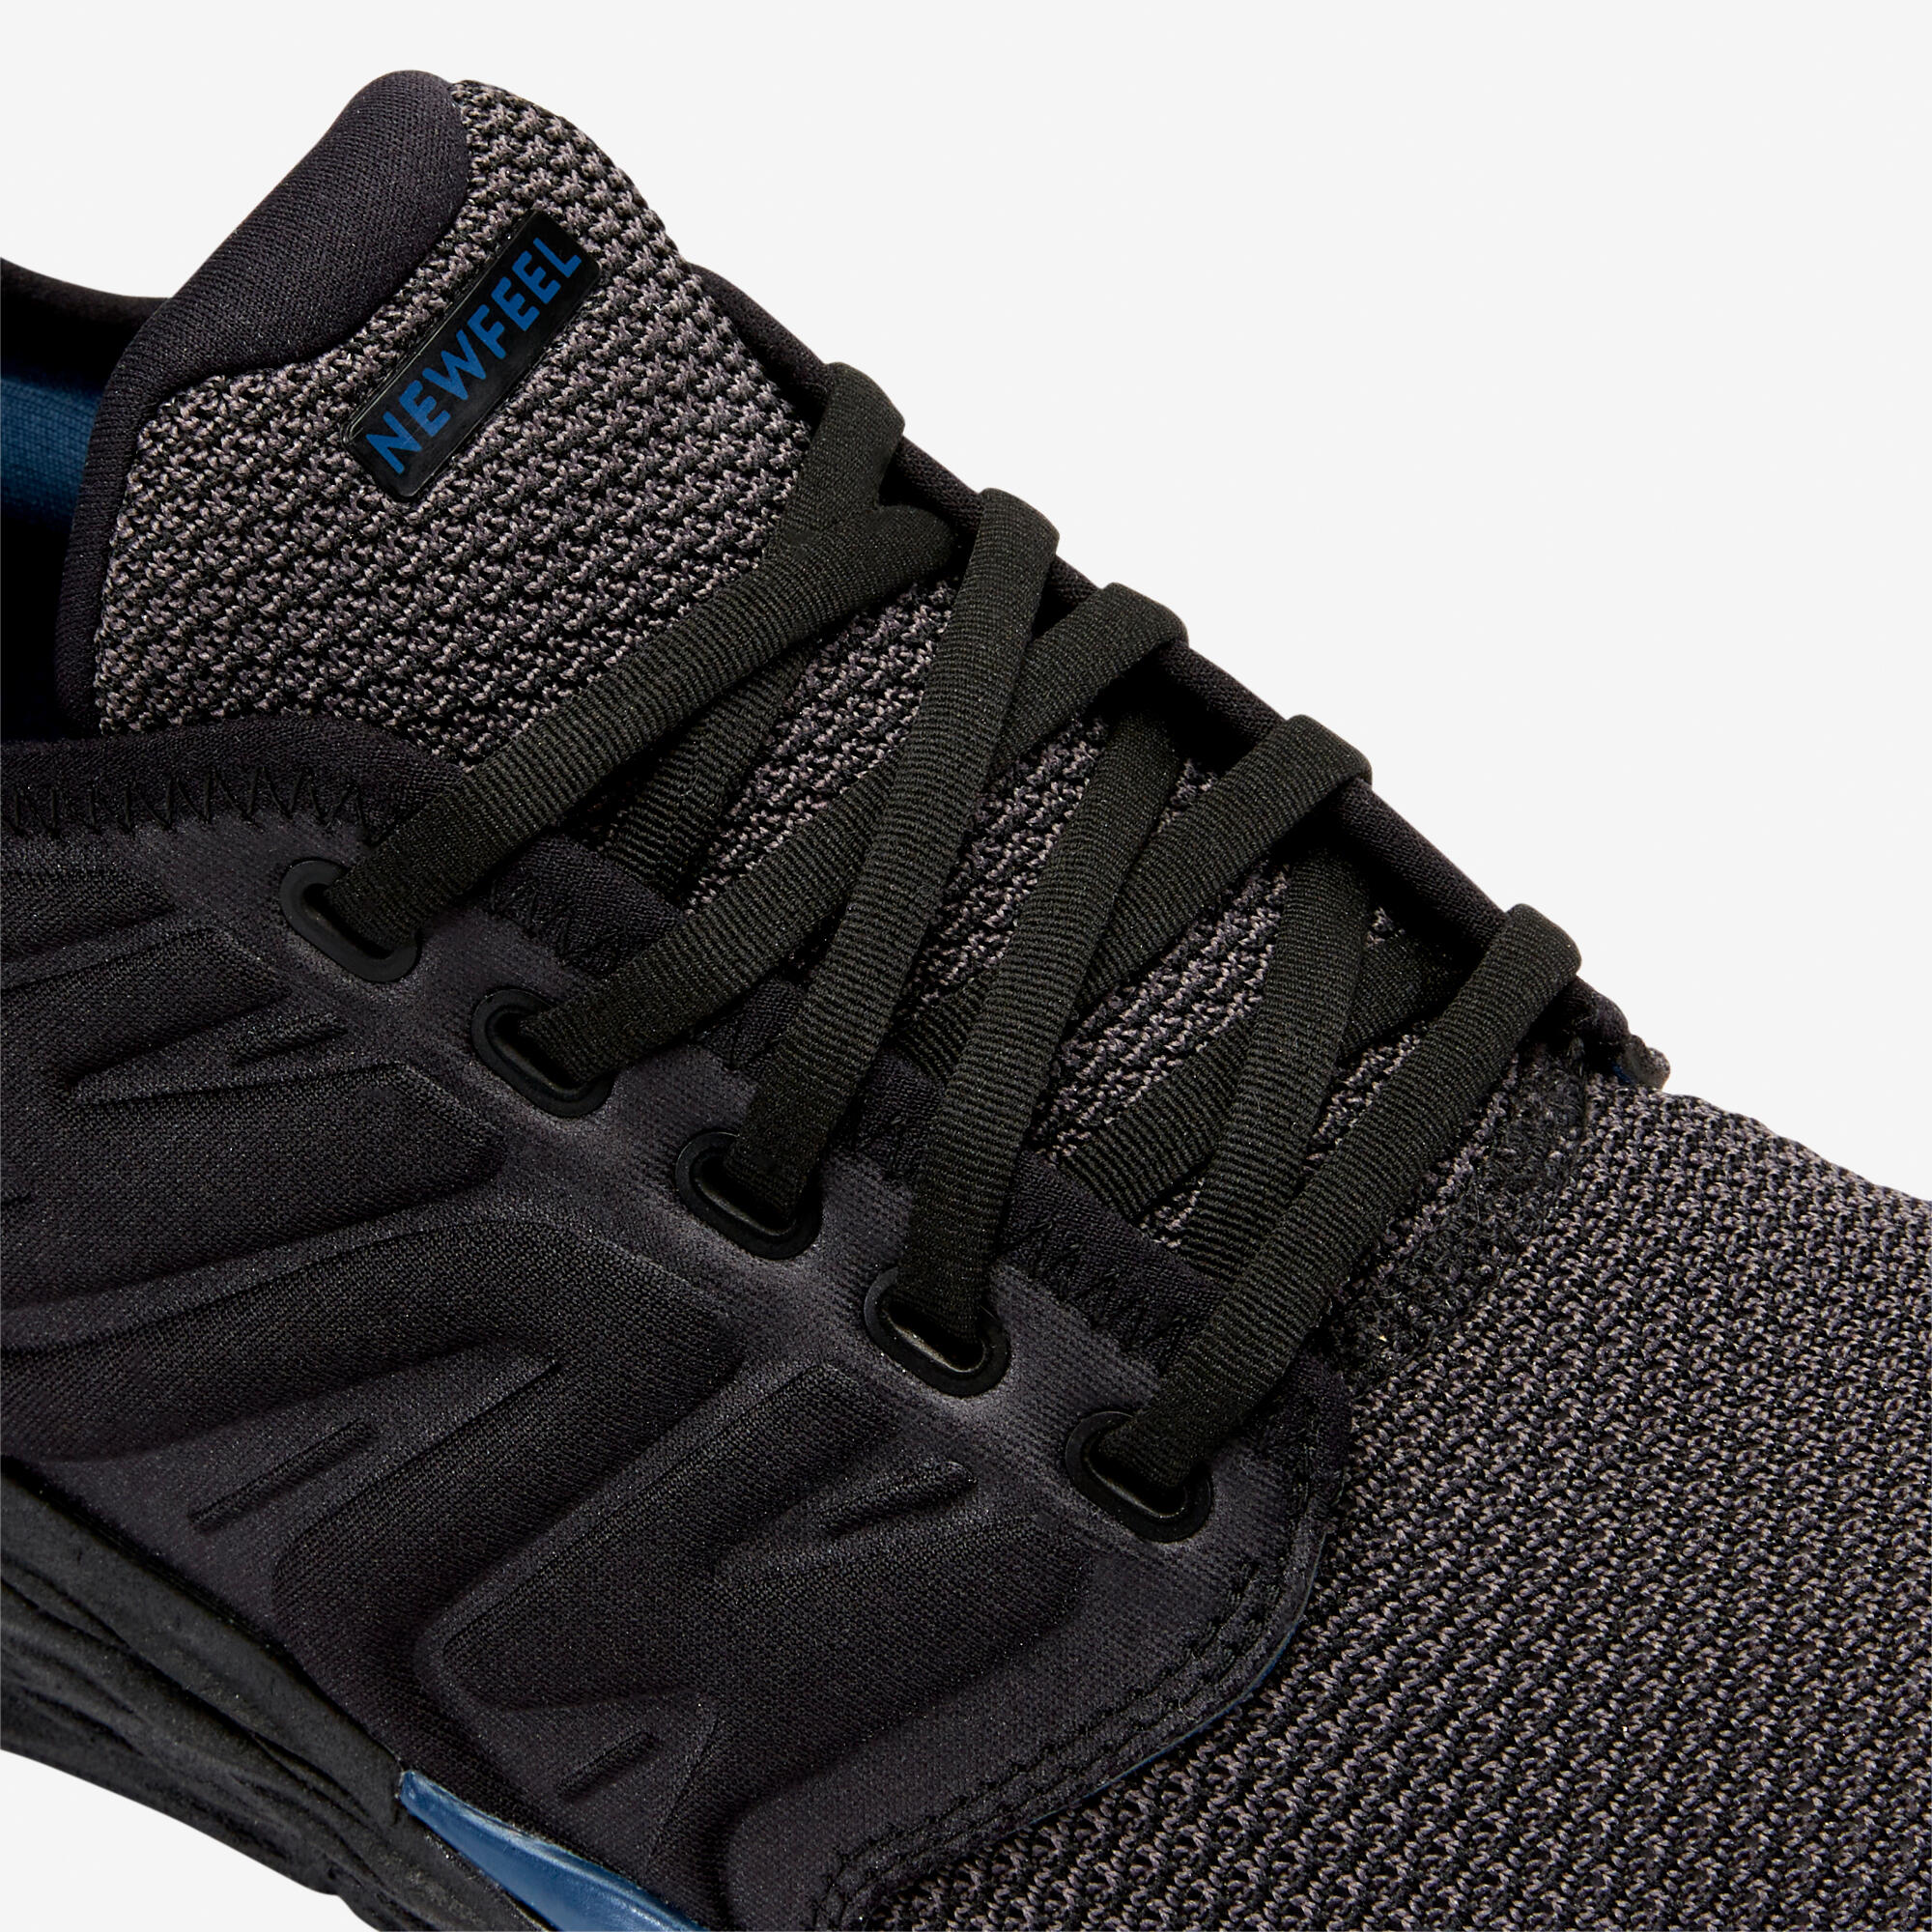 Fitness Walking Shoes Sportwalk Comfort - black/blue 7/7